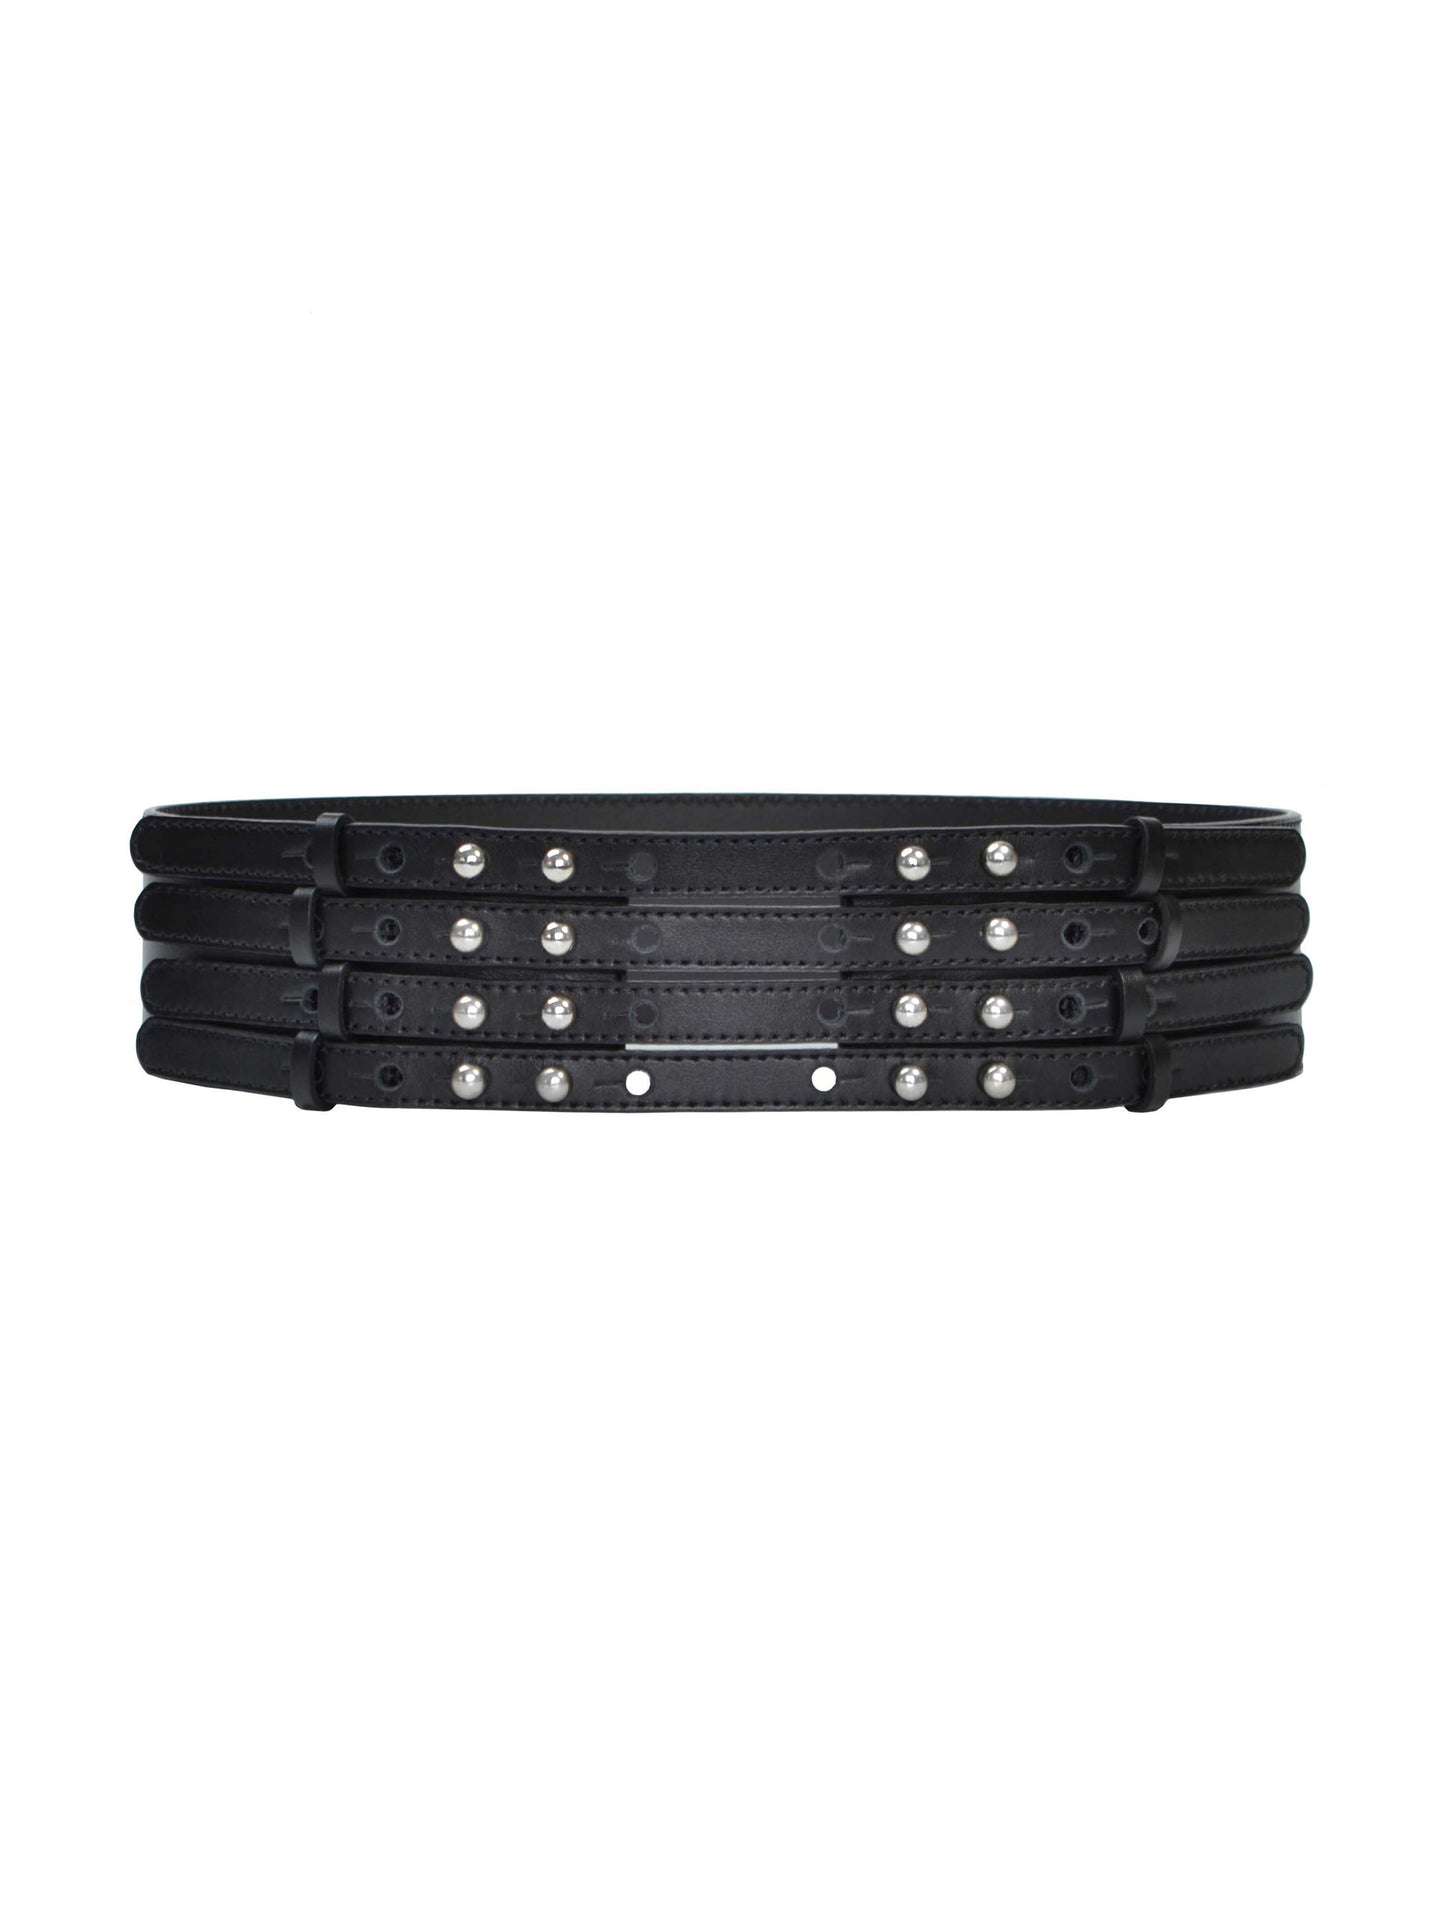 Front view of multistrap black waist cincher belt.